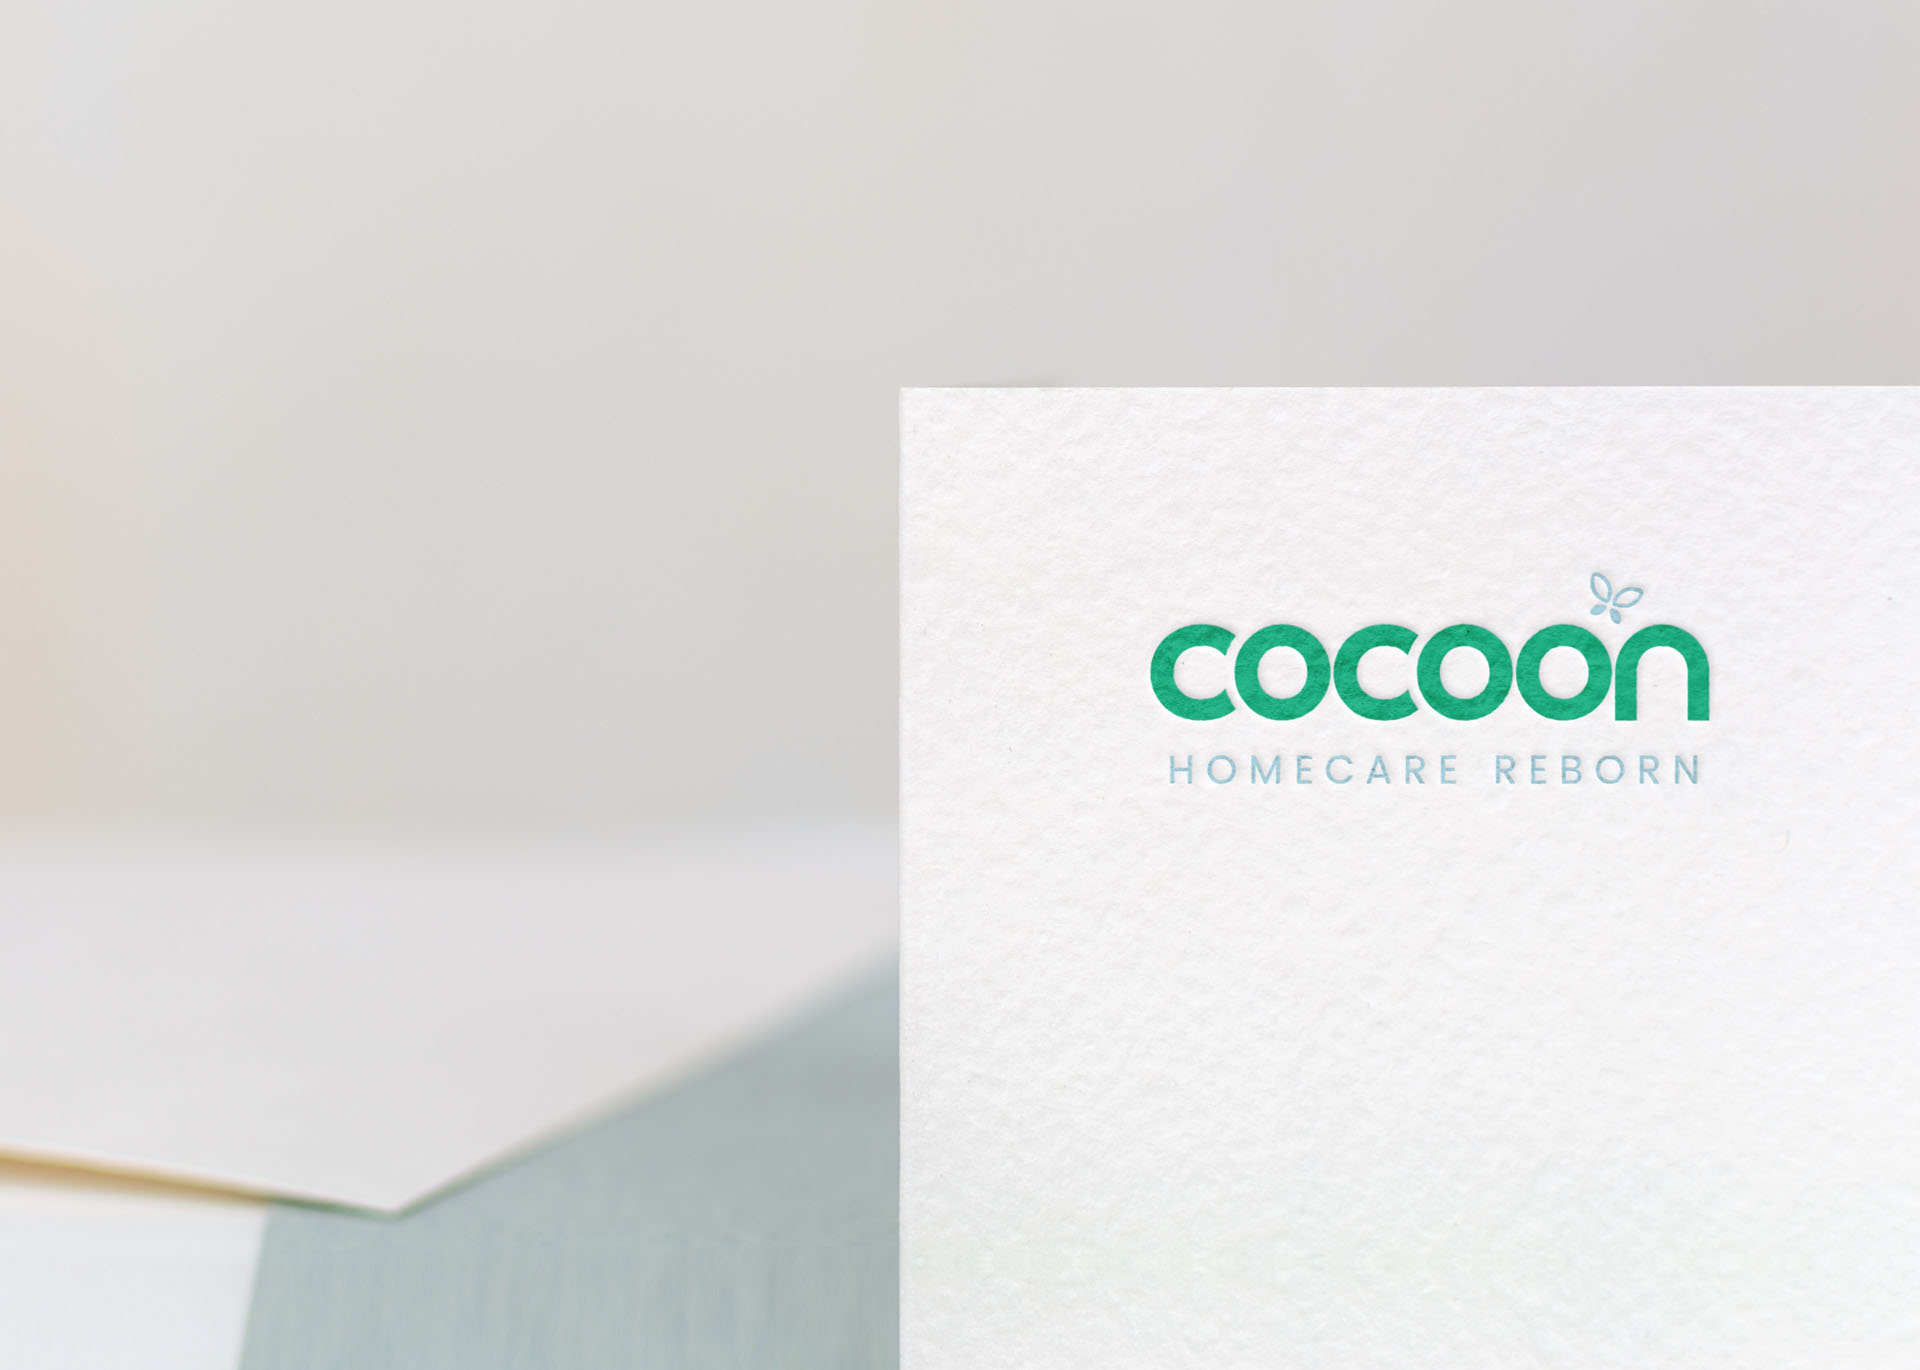 Cocoon Homecare